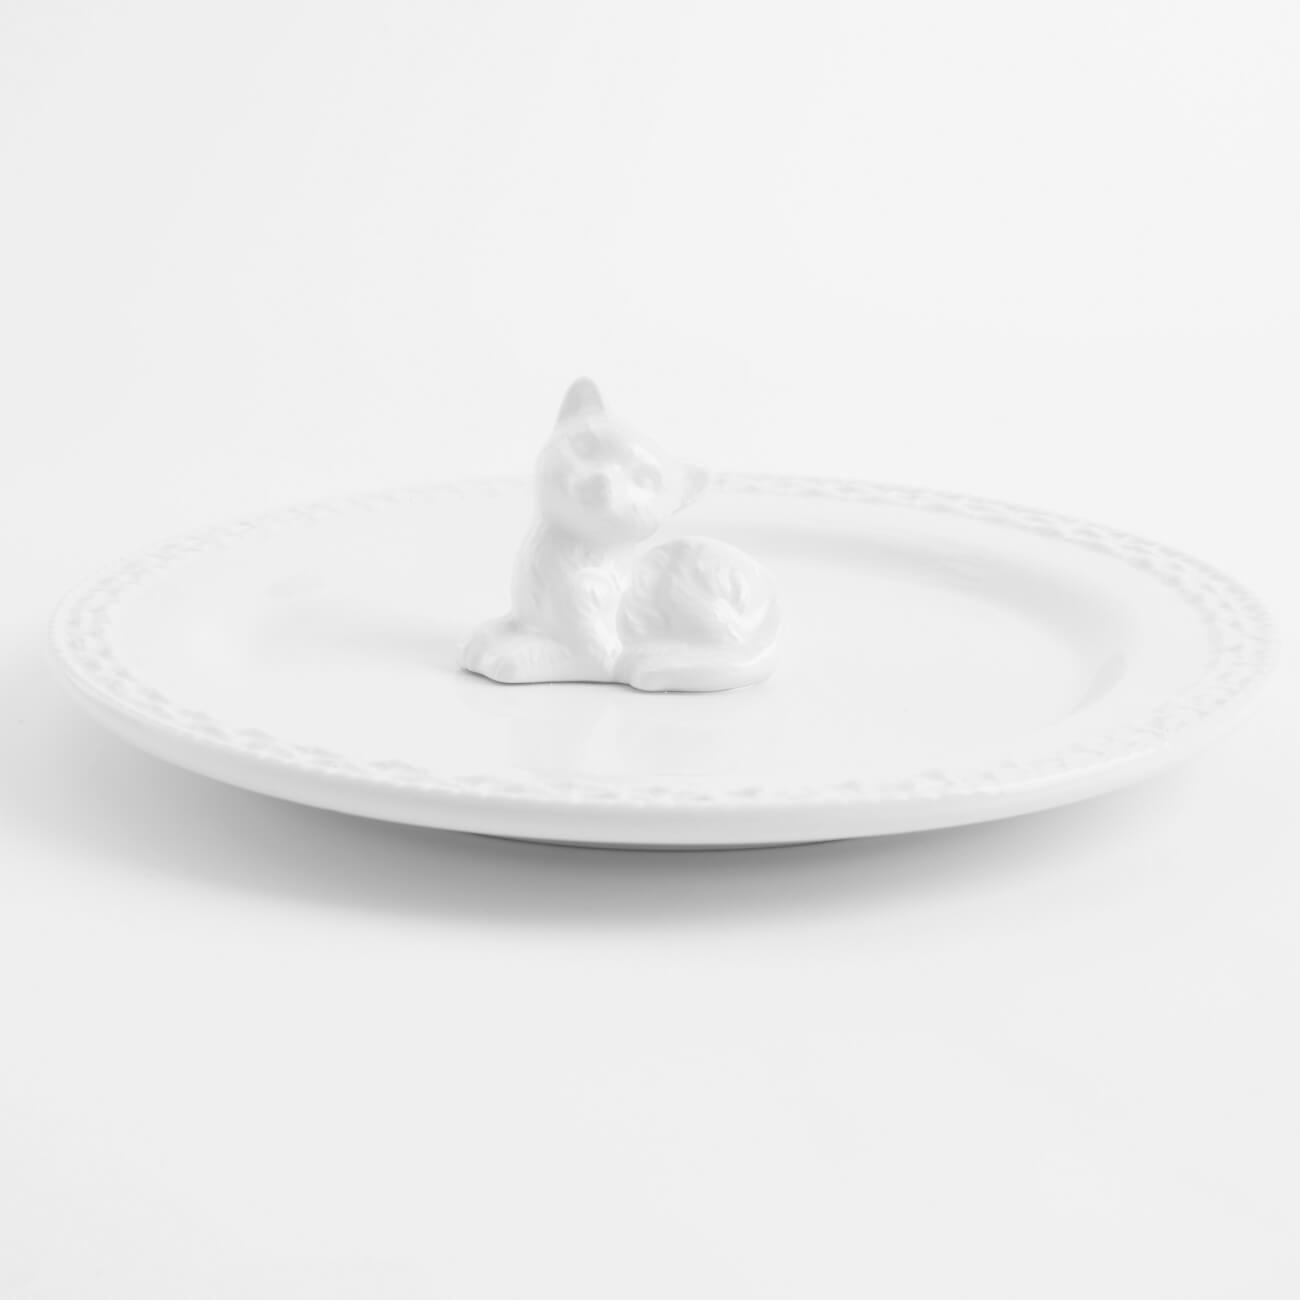 Блюдо, 20 см, керамика, белое, Кот, Kitten блюдо керамика фигурное 12х20х2 см белое лист y4 3730